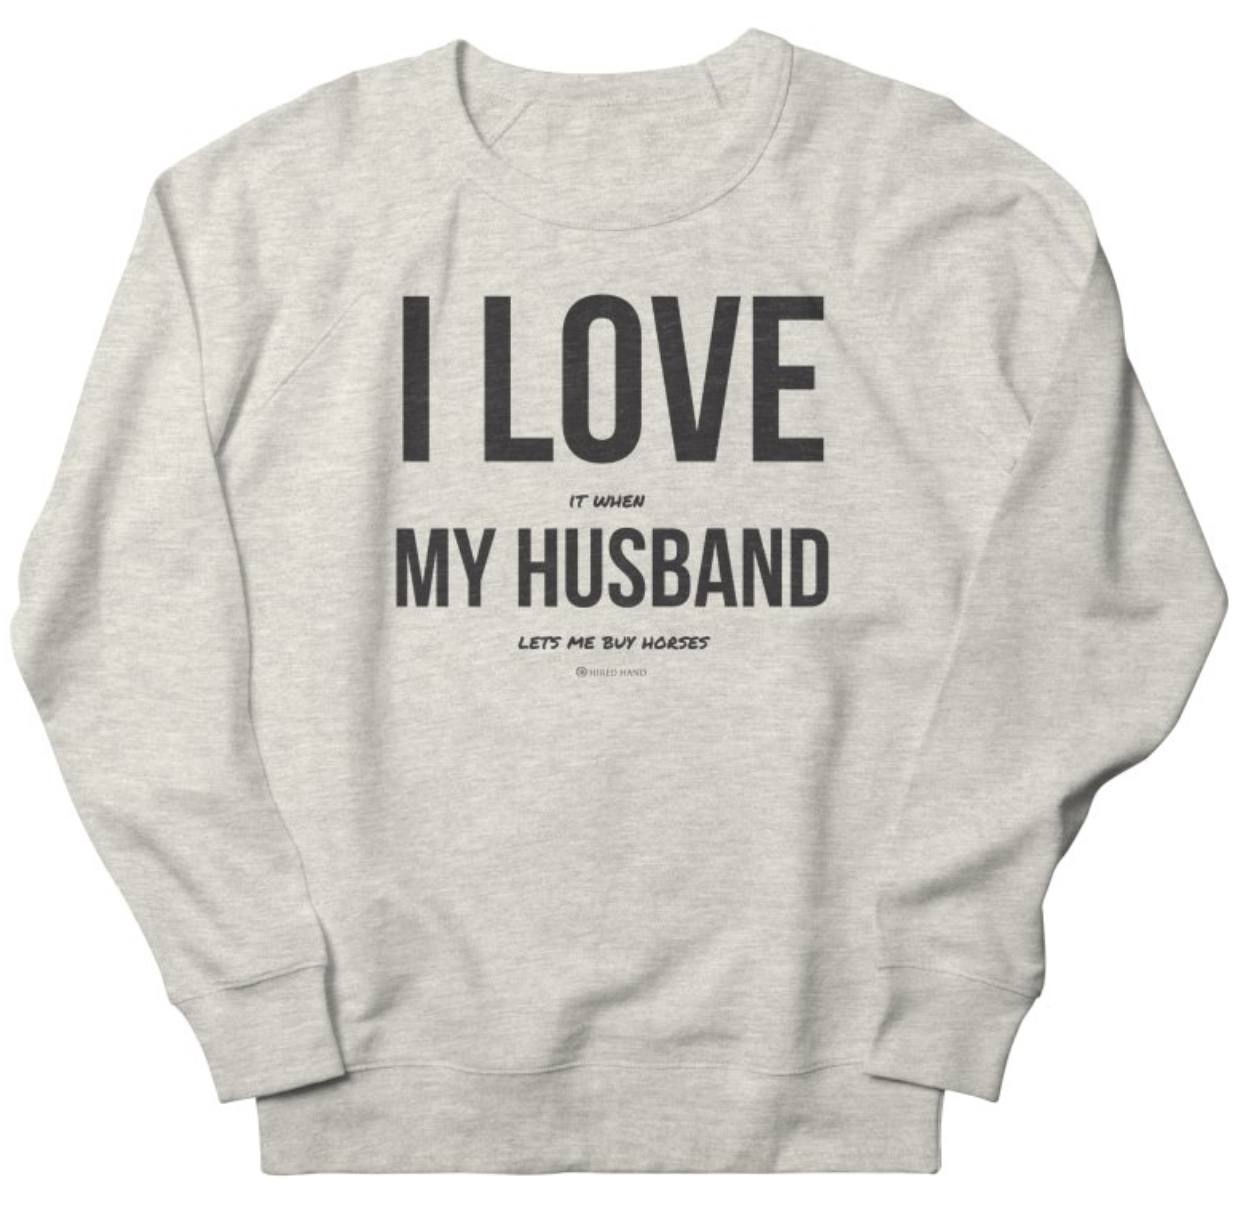 I Love My Husband sweatshirt